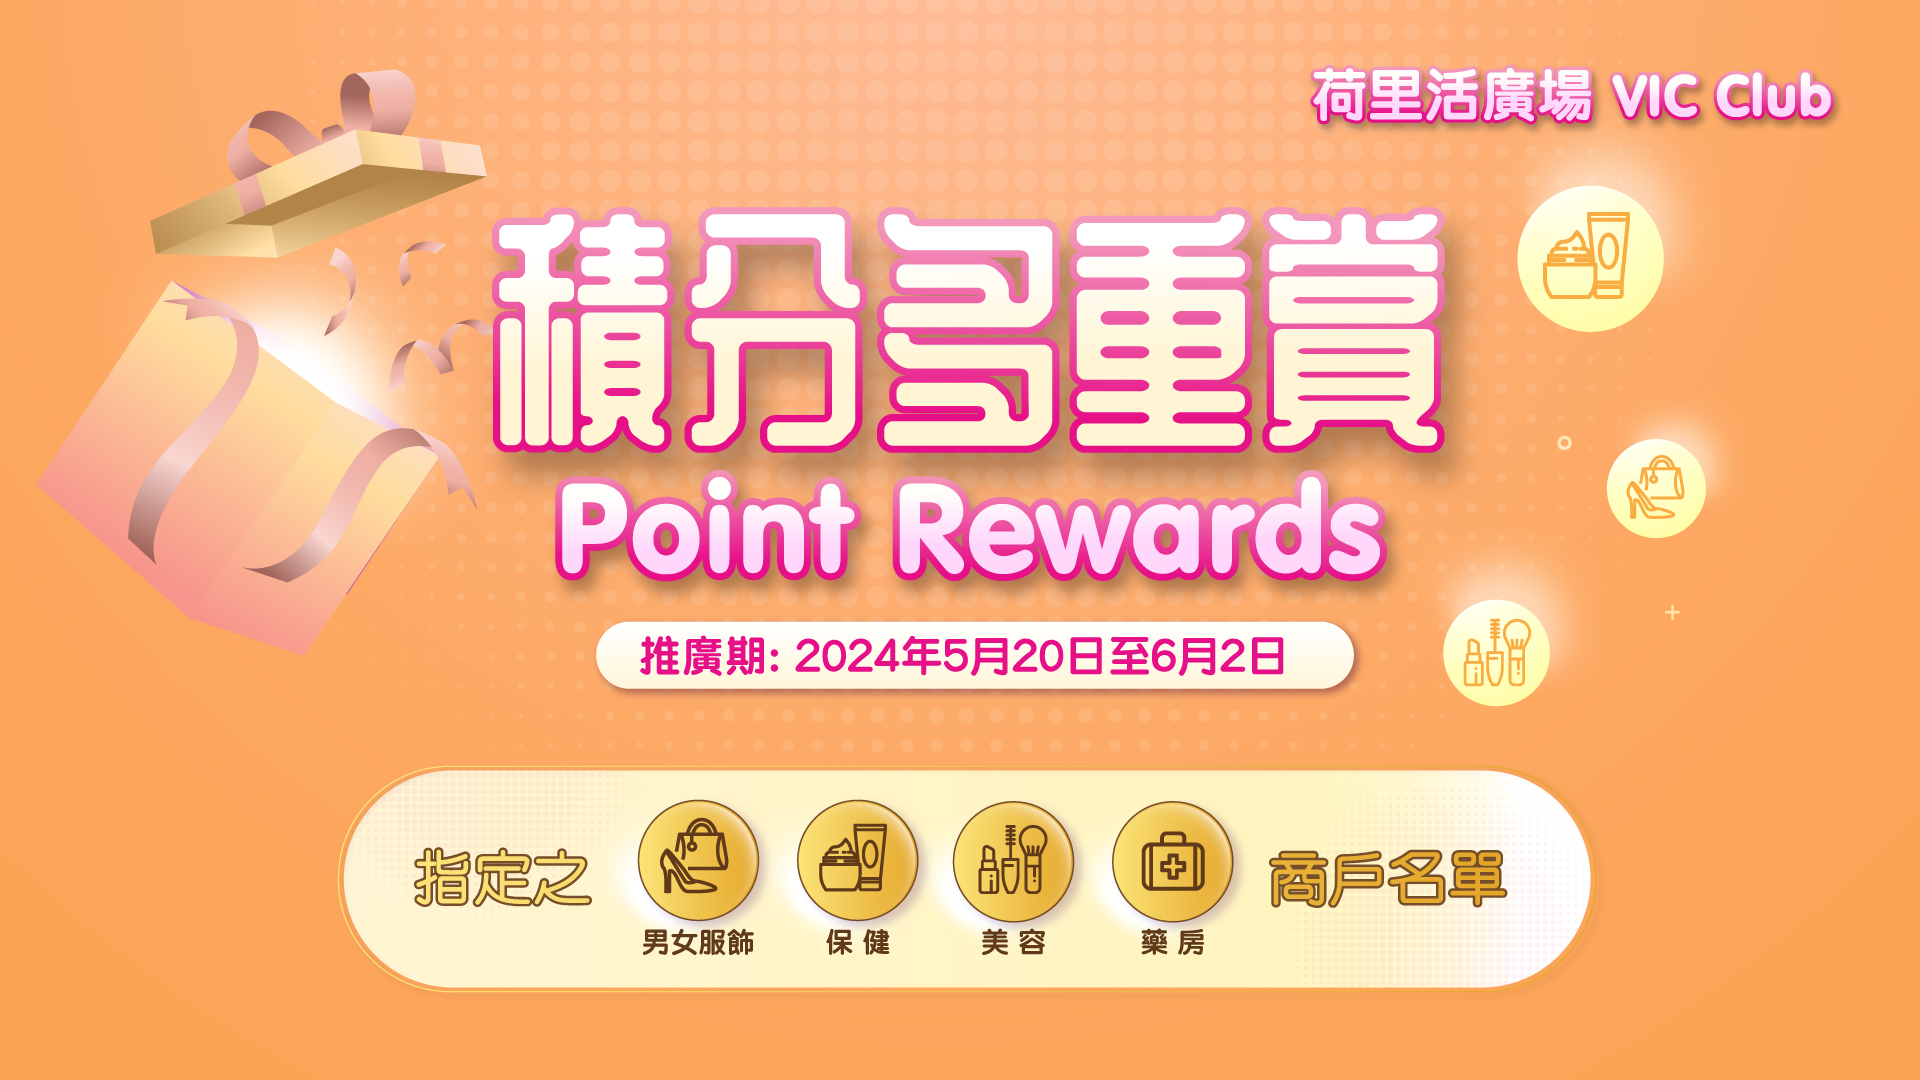 Point Rewards - designated tenant list